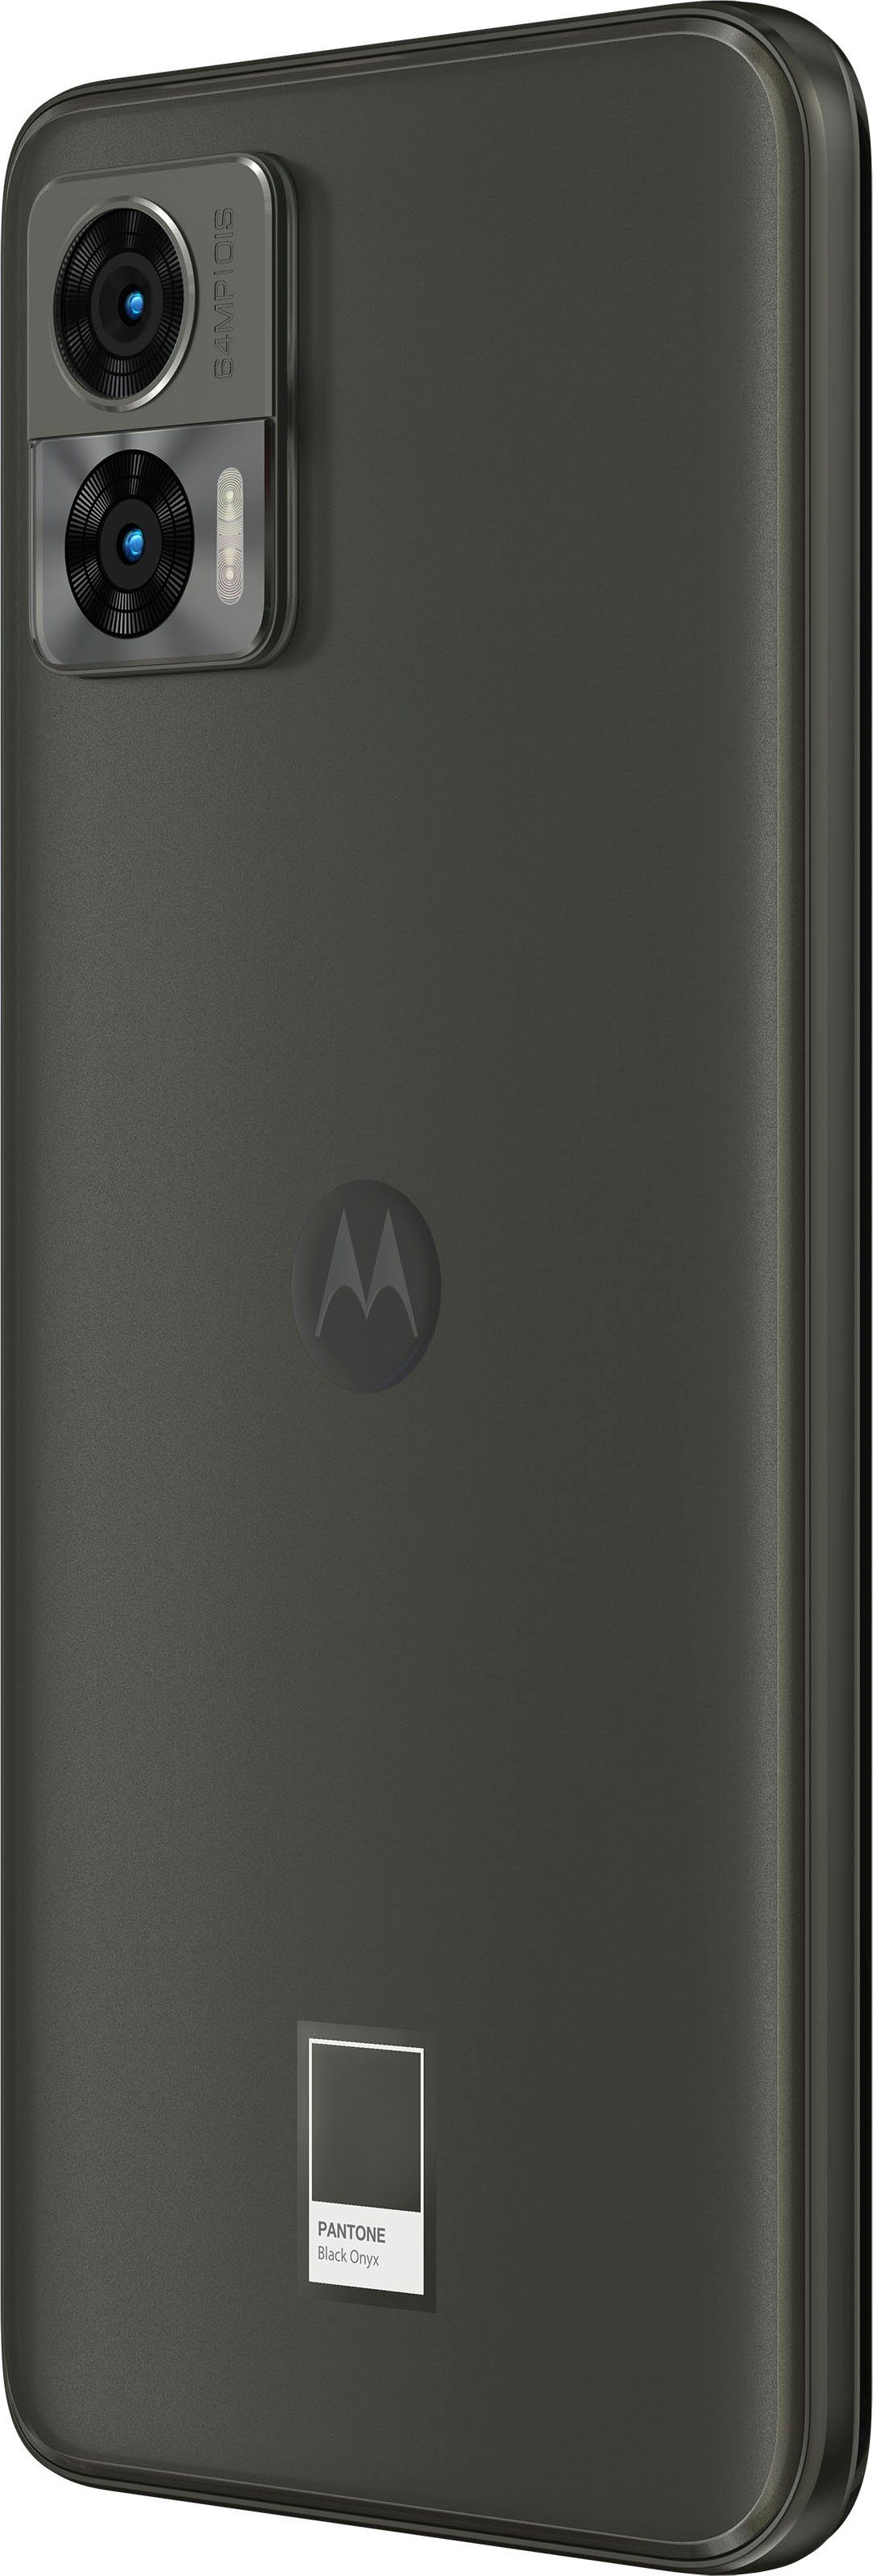 Motorola Edge 30 256 64 256 cm/6,3 Zoll, (16 Speicherplatz, Kamera) Neo Smartphone GB MP GB